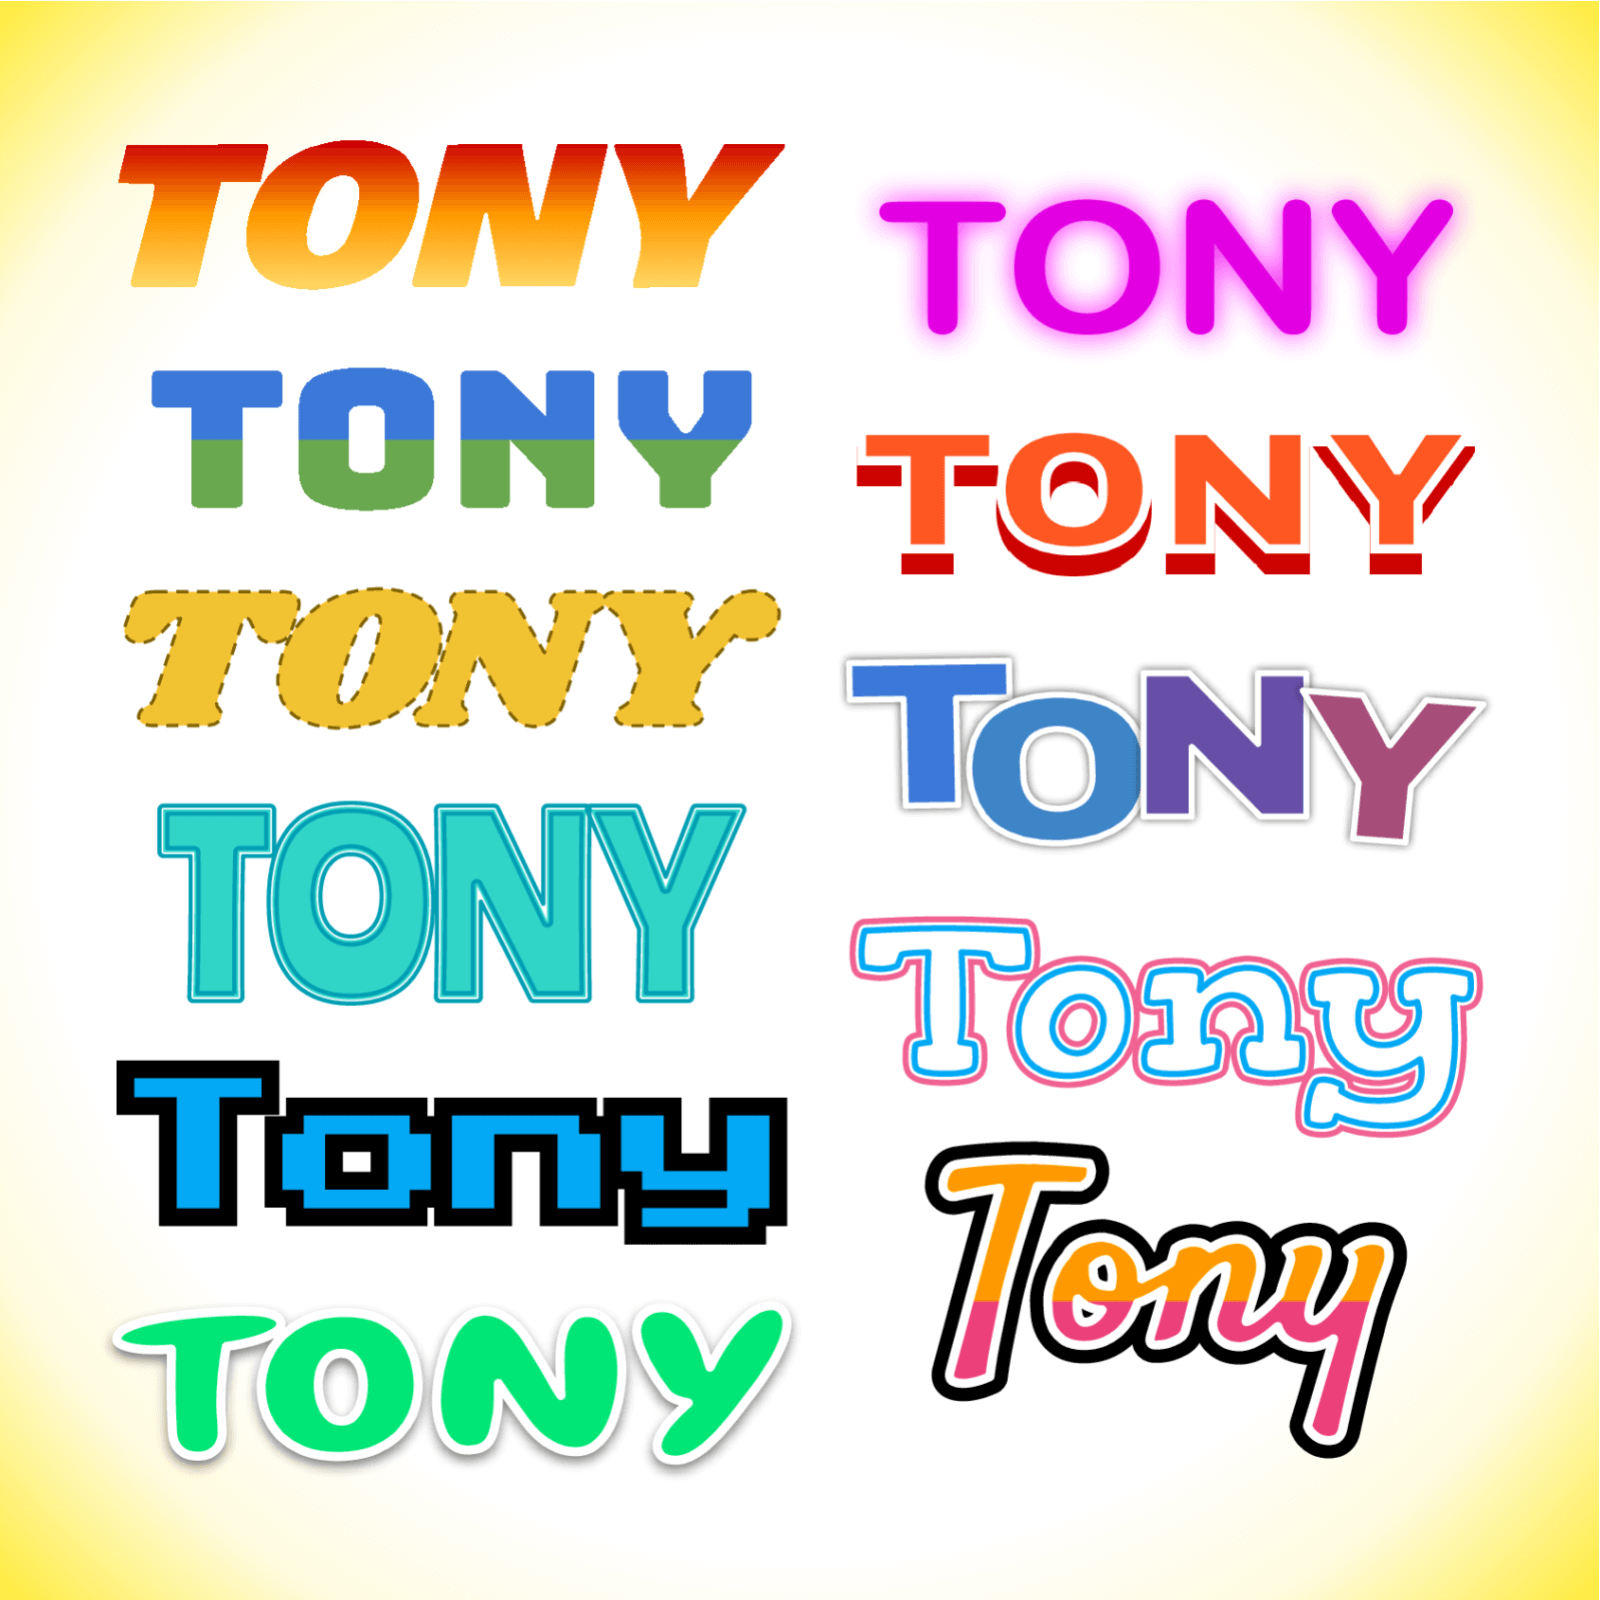 "Tony" styles 11 different ways